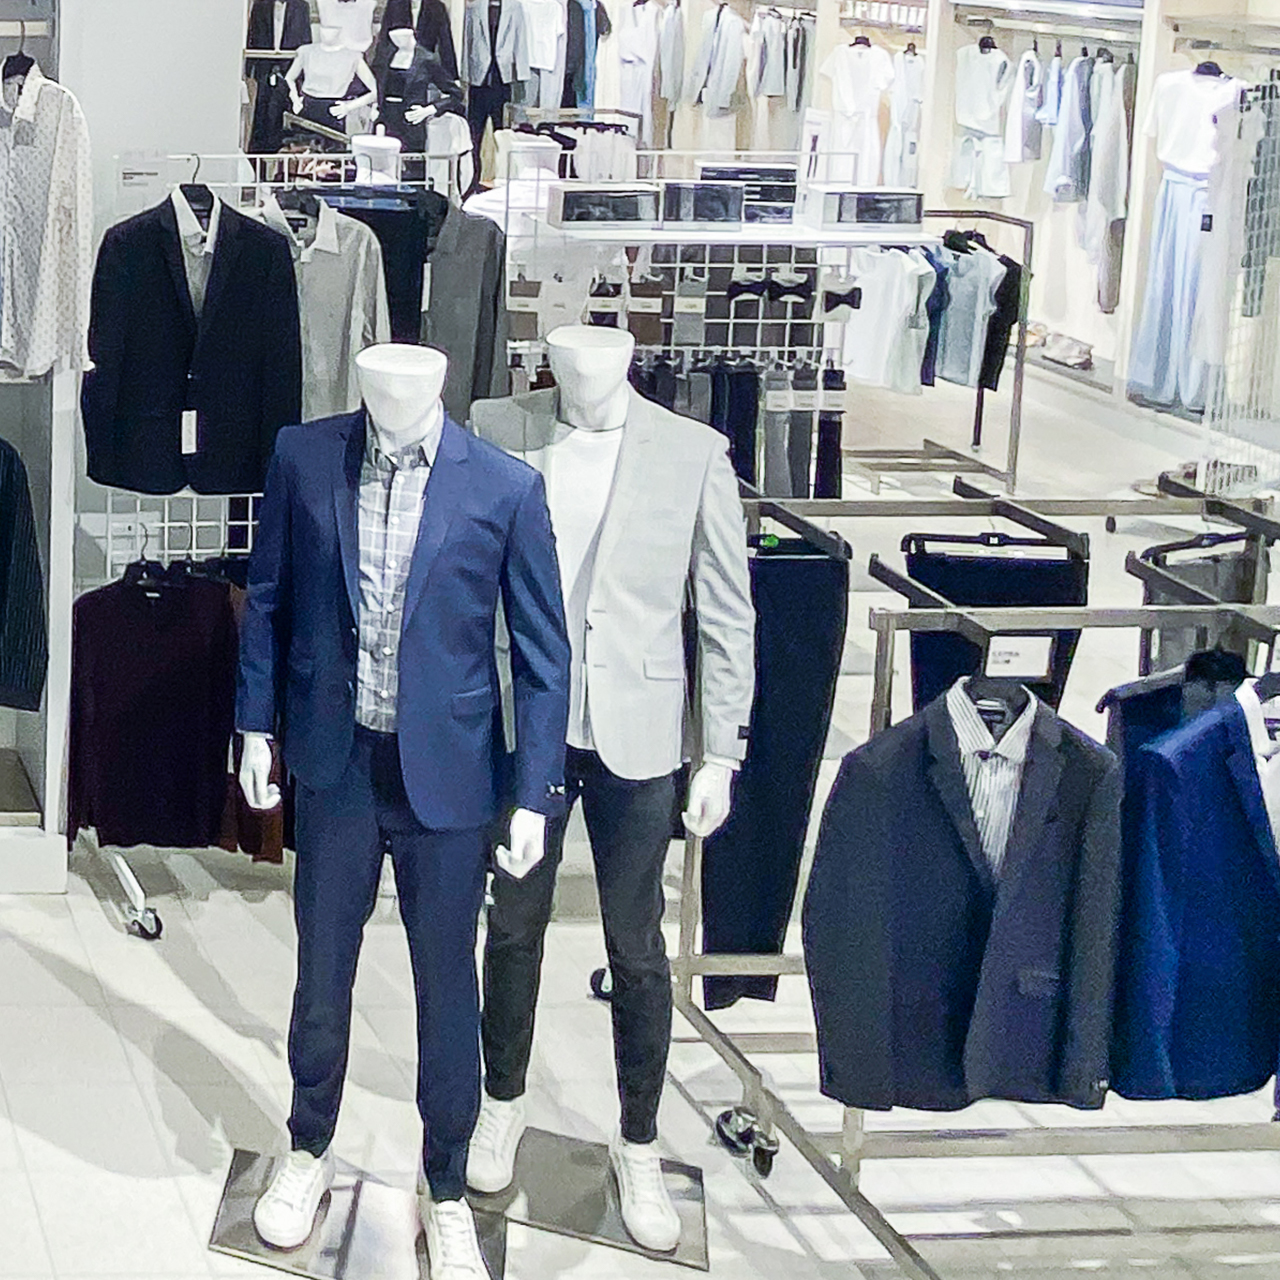 Express Men's Suits Fredericksburg, VA | Blazers, suit jackets, 3 piece ...